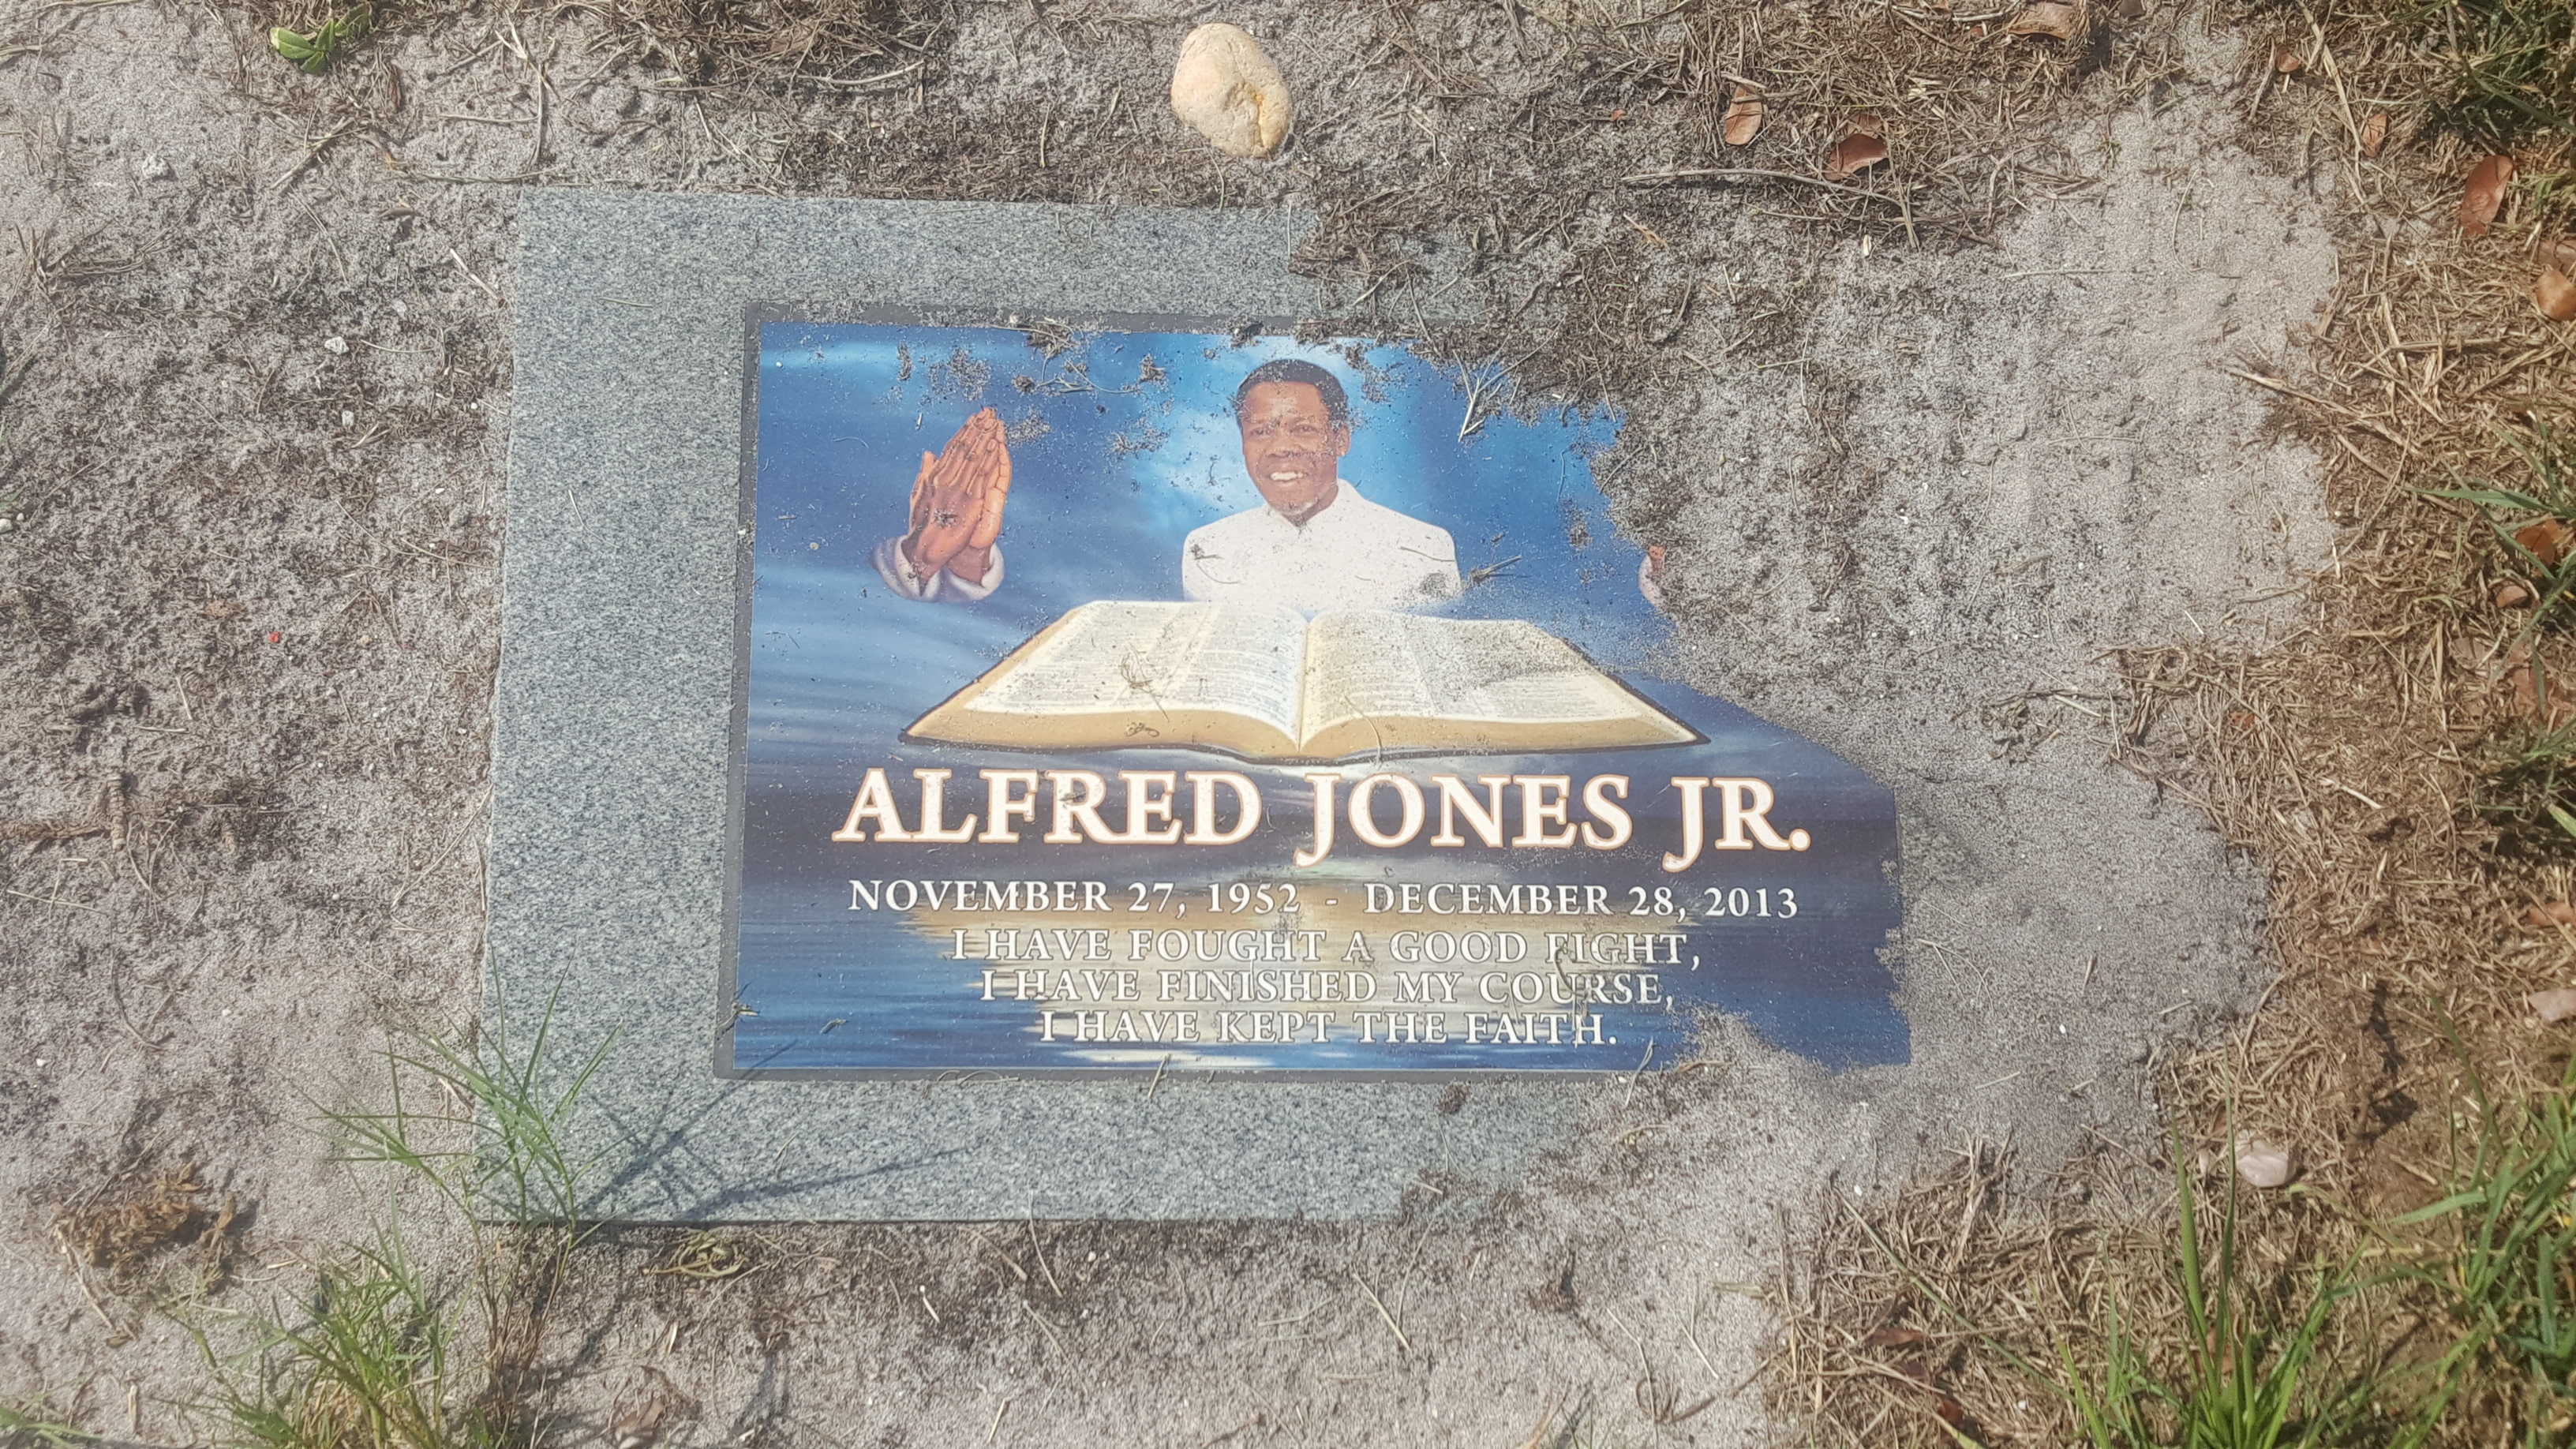 Alfred Jones, Jr